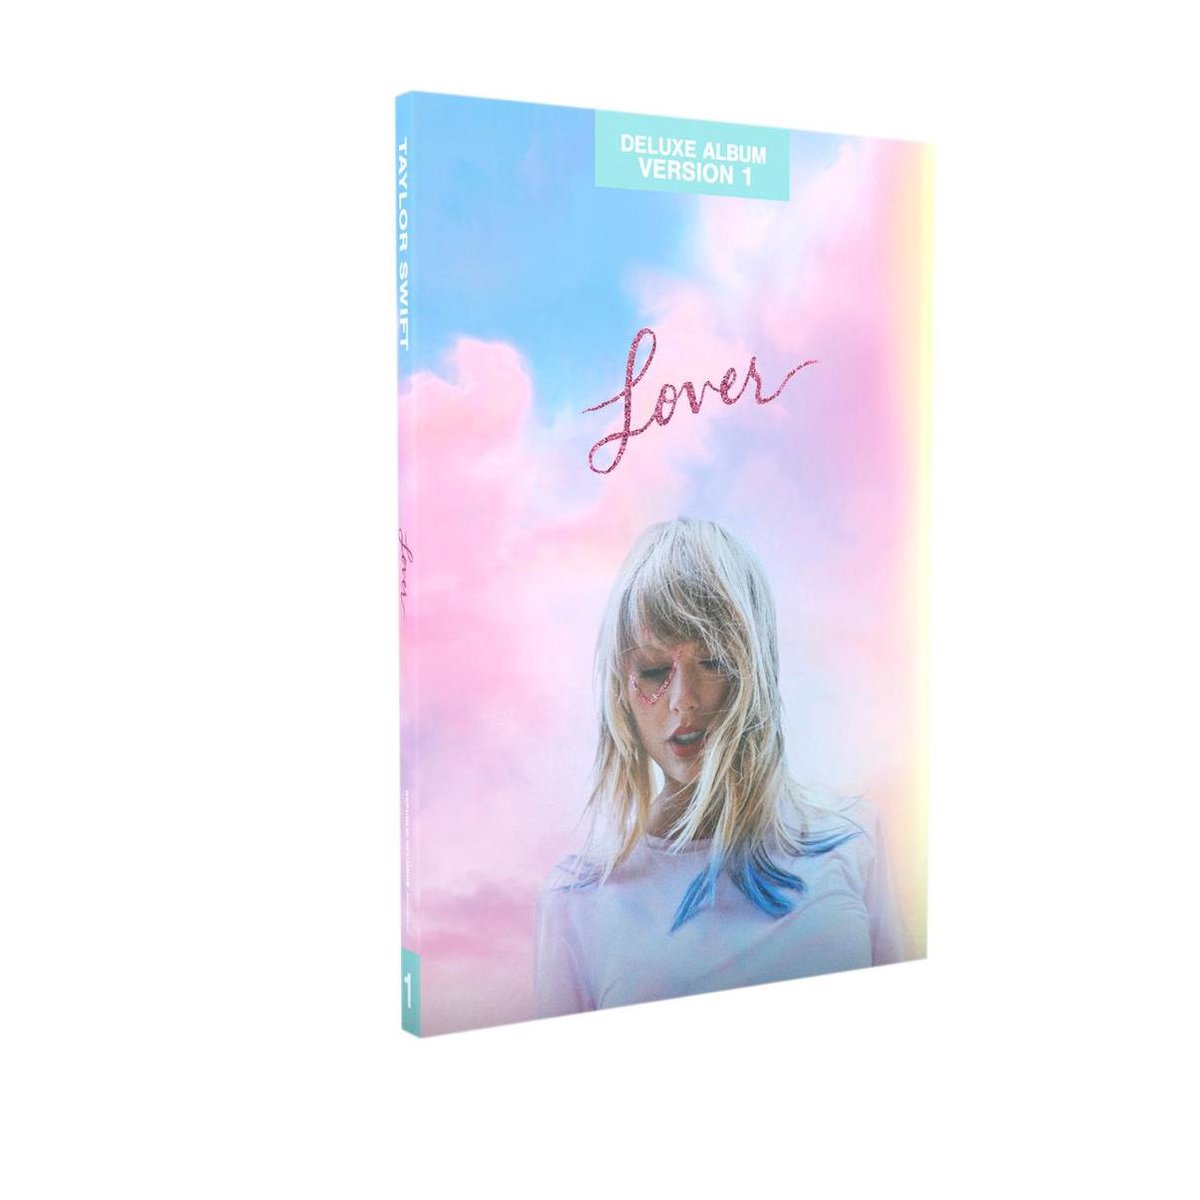 Lover (Deluxe Album Version 1) - Taylor Swift